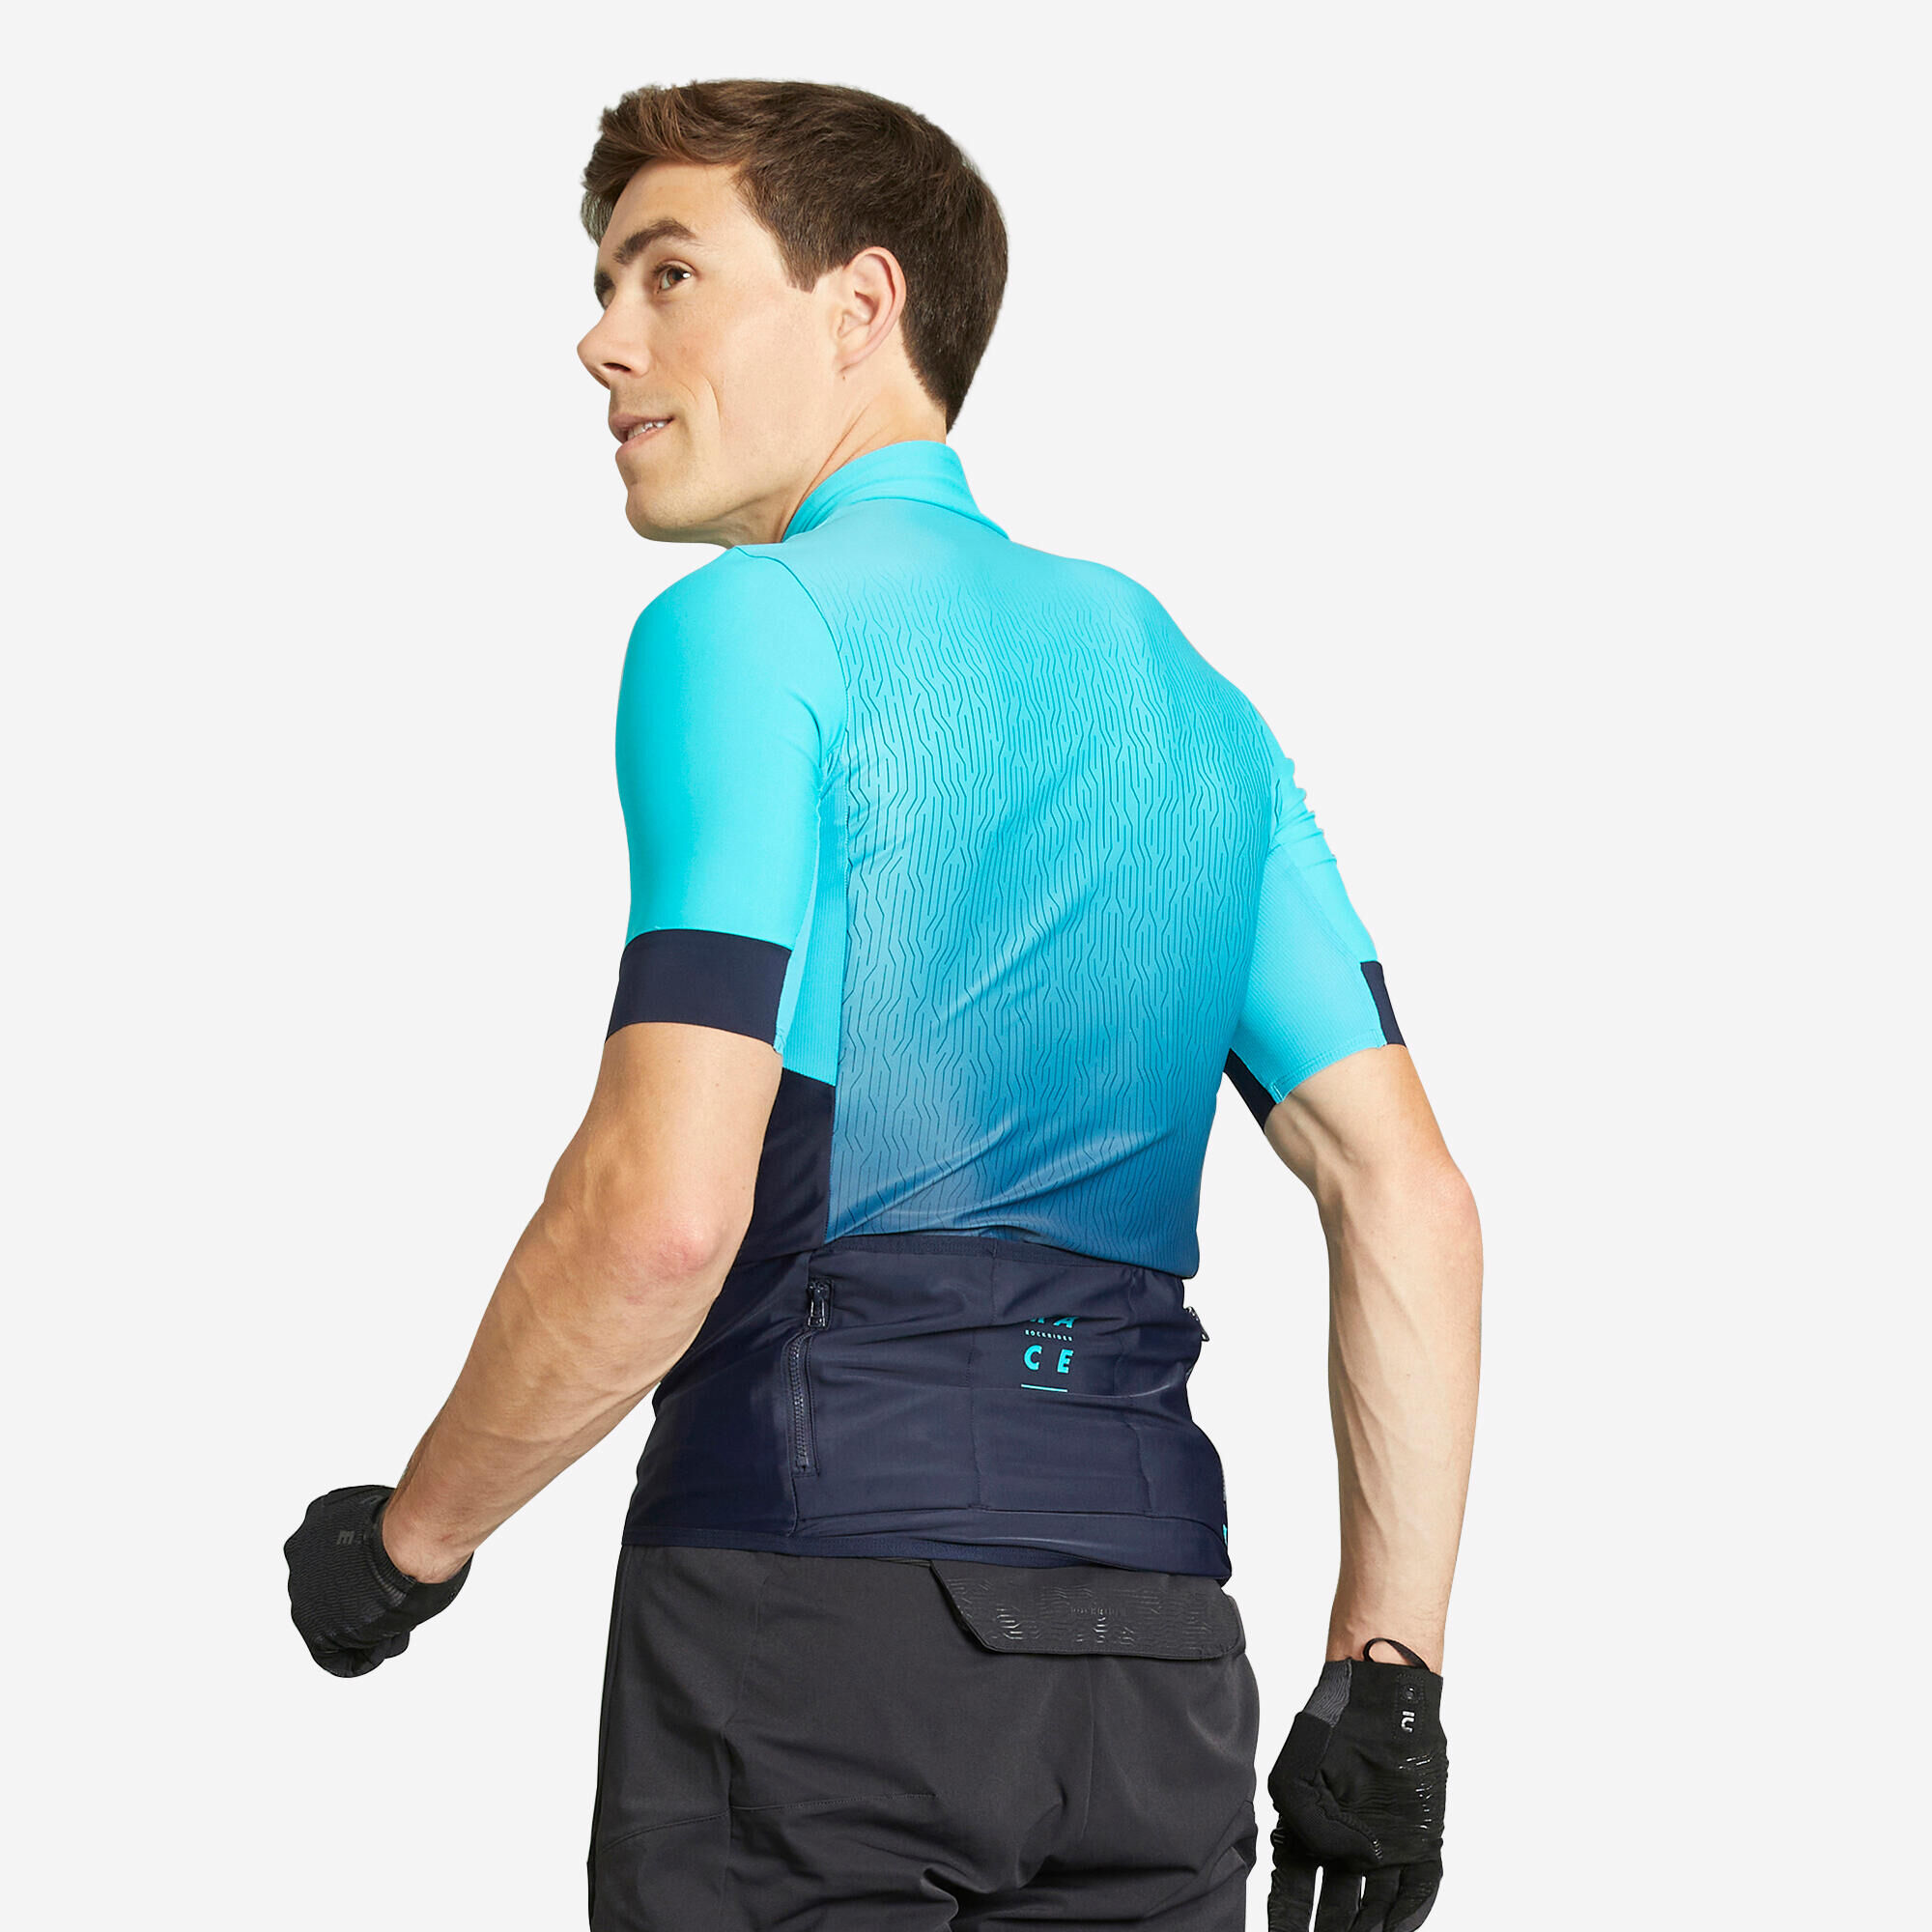 ROCKRIDER Men's Short-Sleeved Mountain Biking Jersey - Turquoise